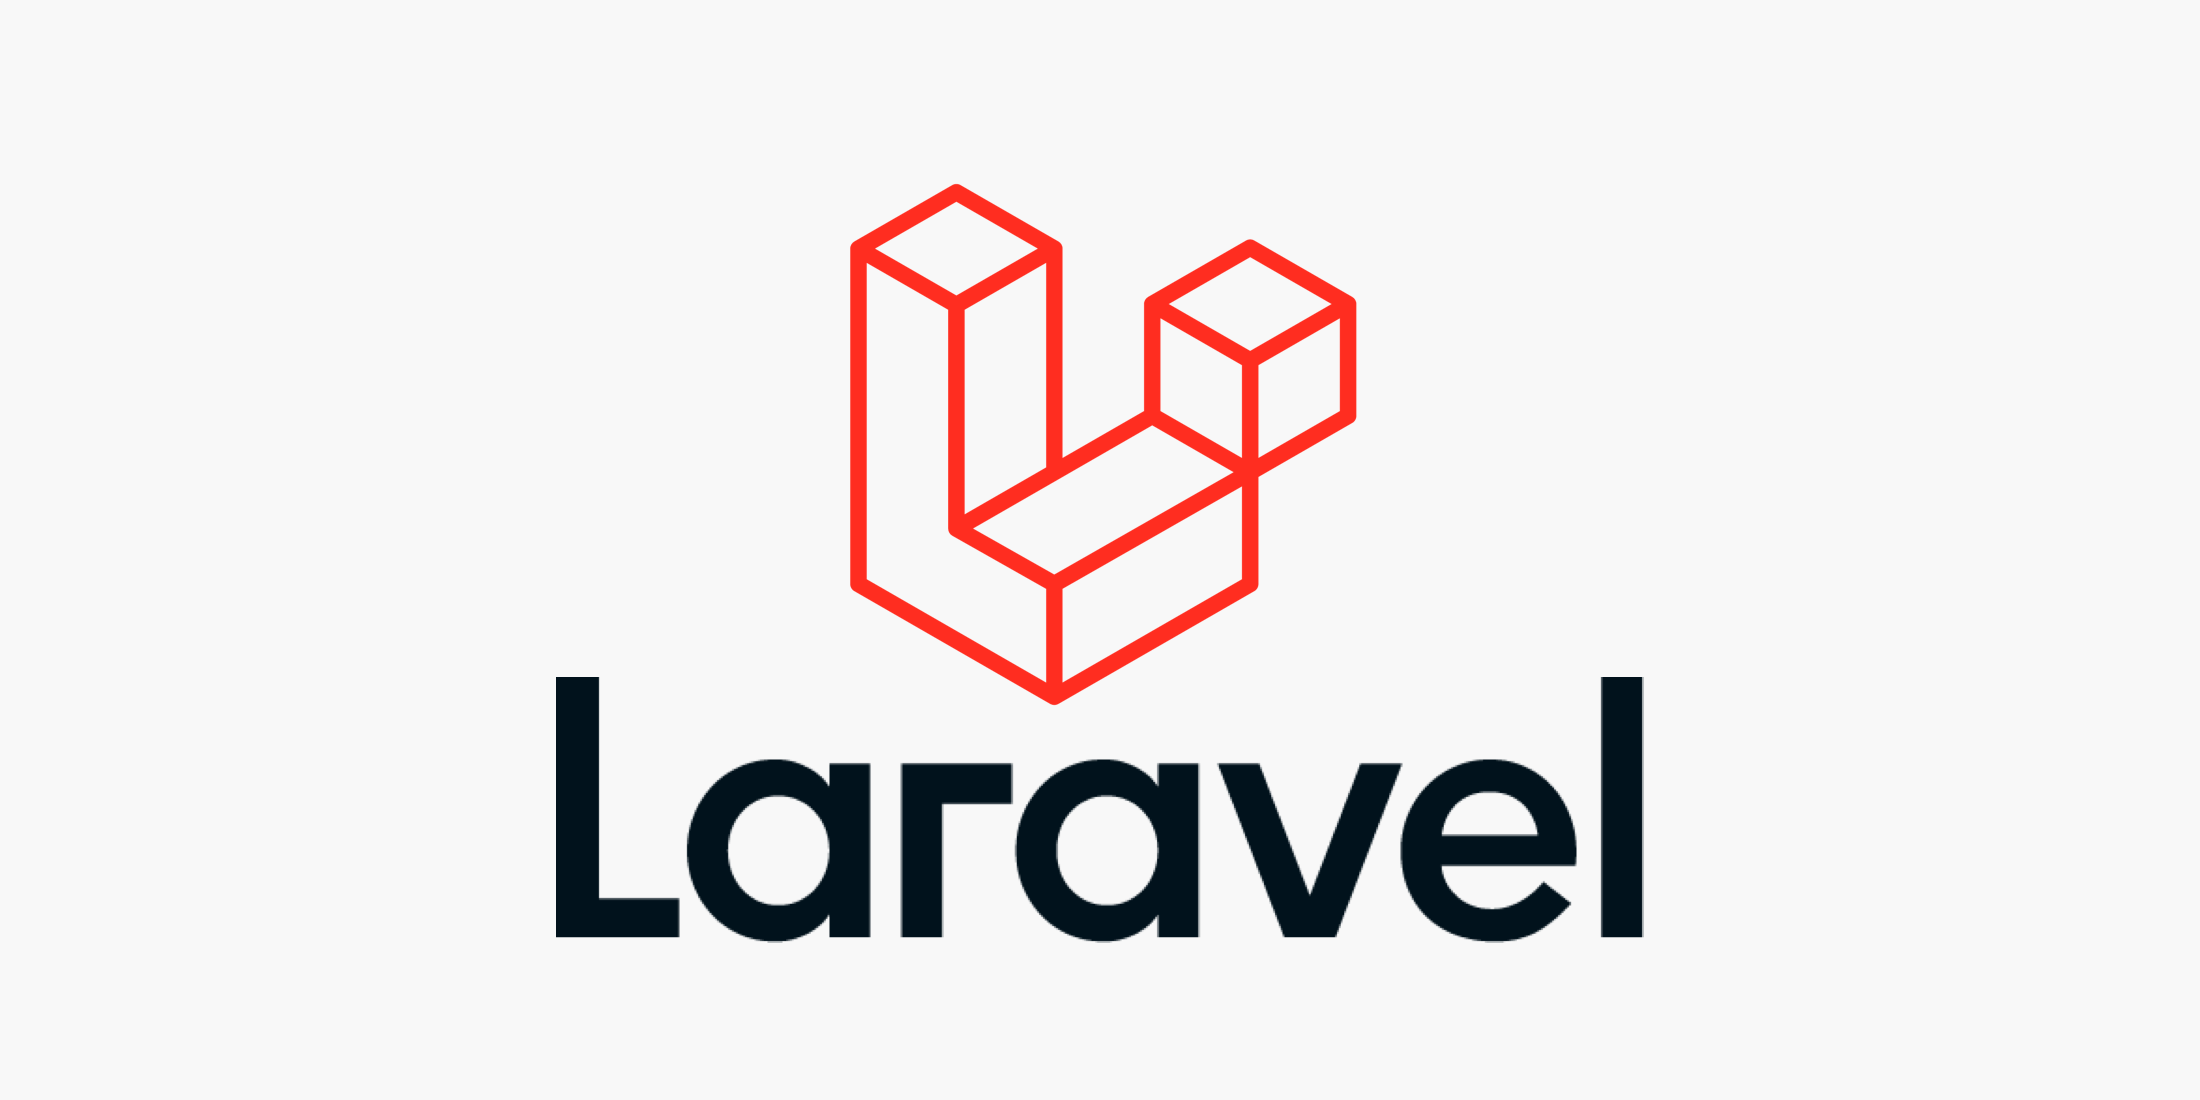 What is Laravel? image